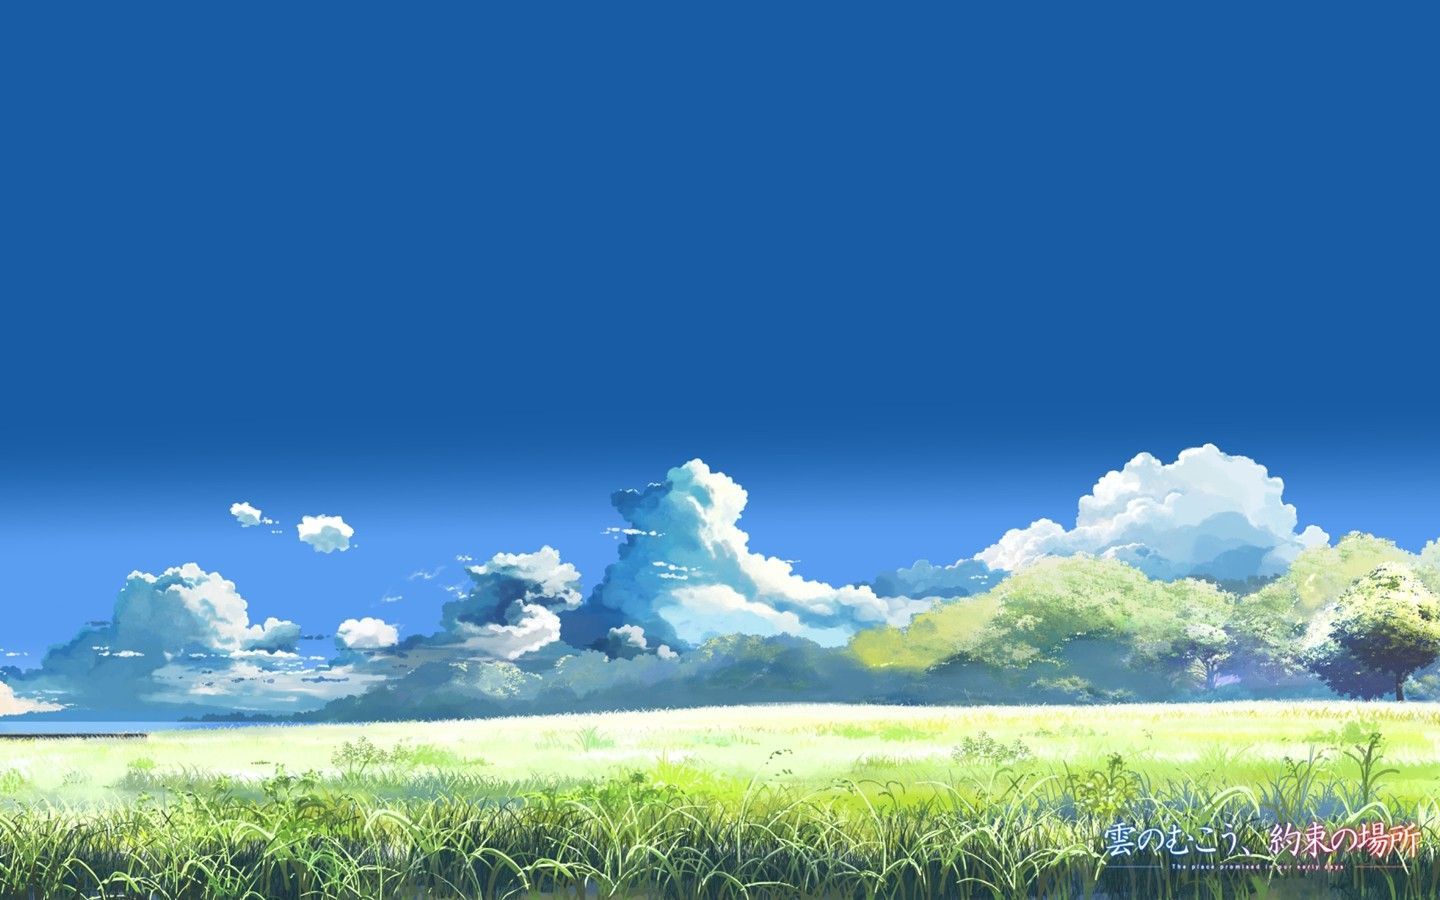 Pokemon Scenery Wallpaper Free Pokemon Scenery Background